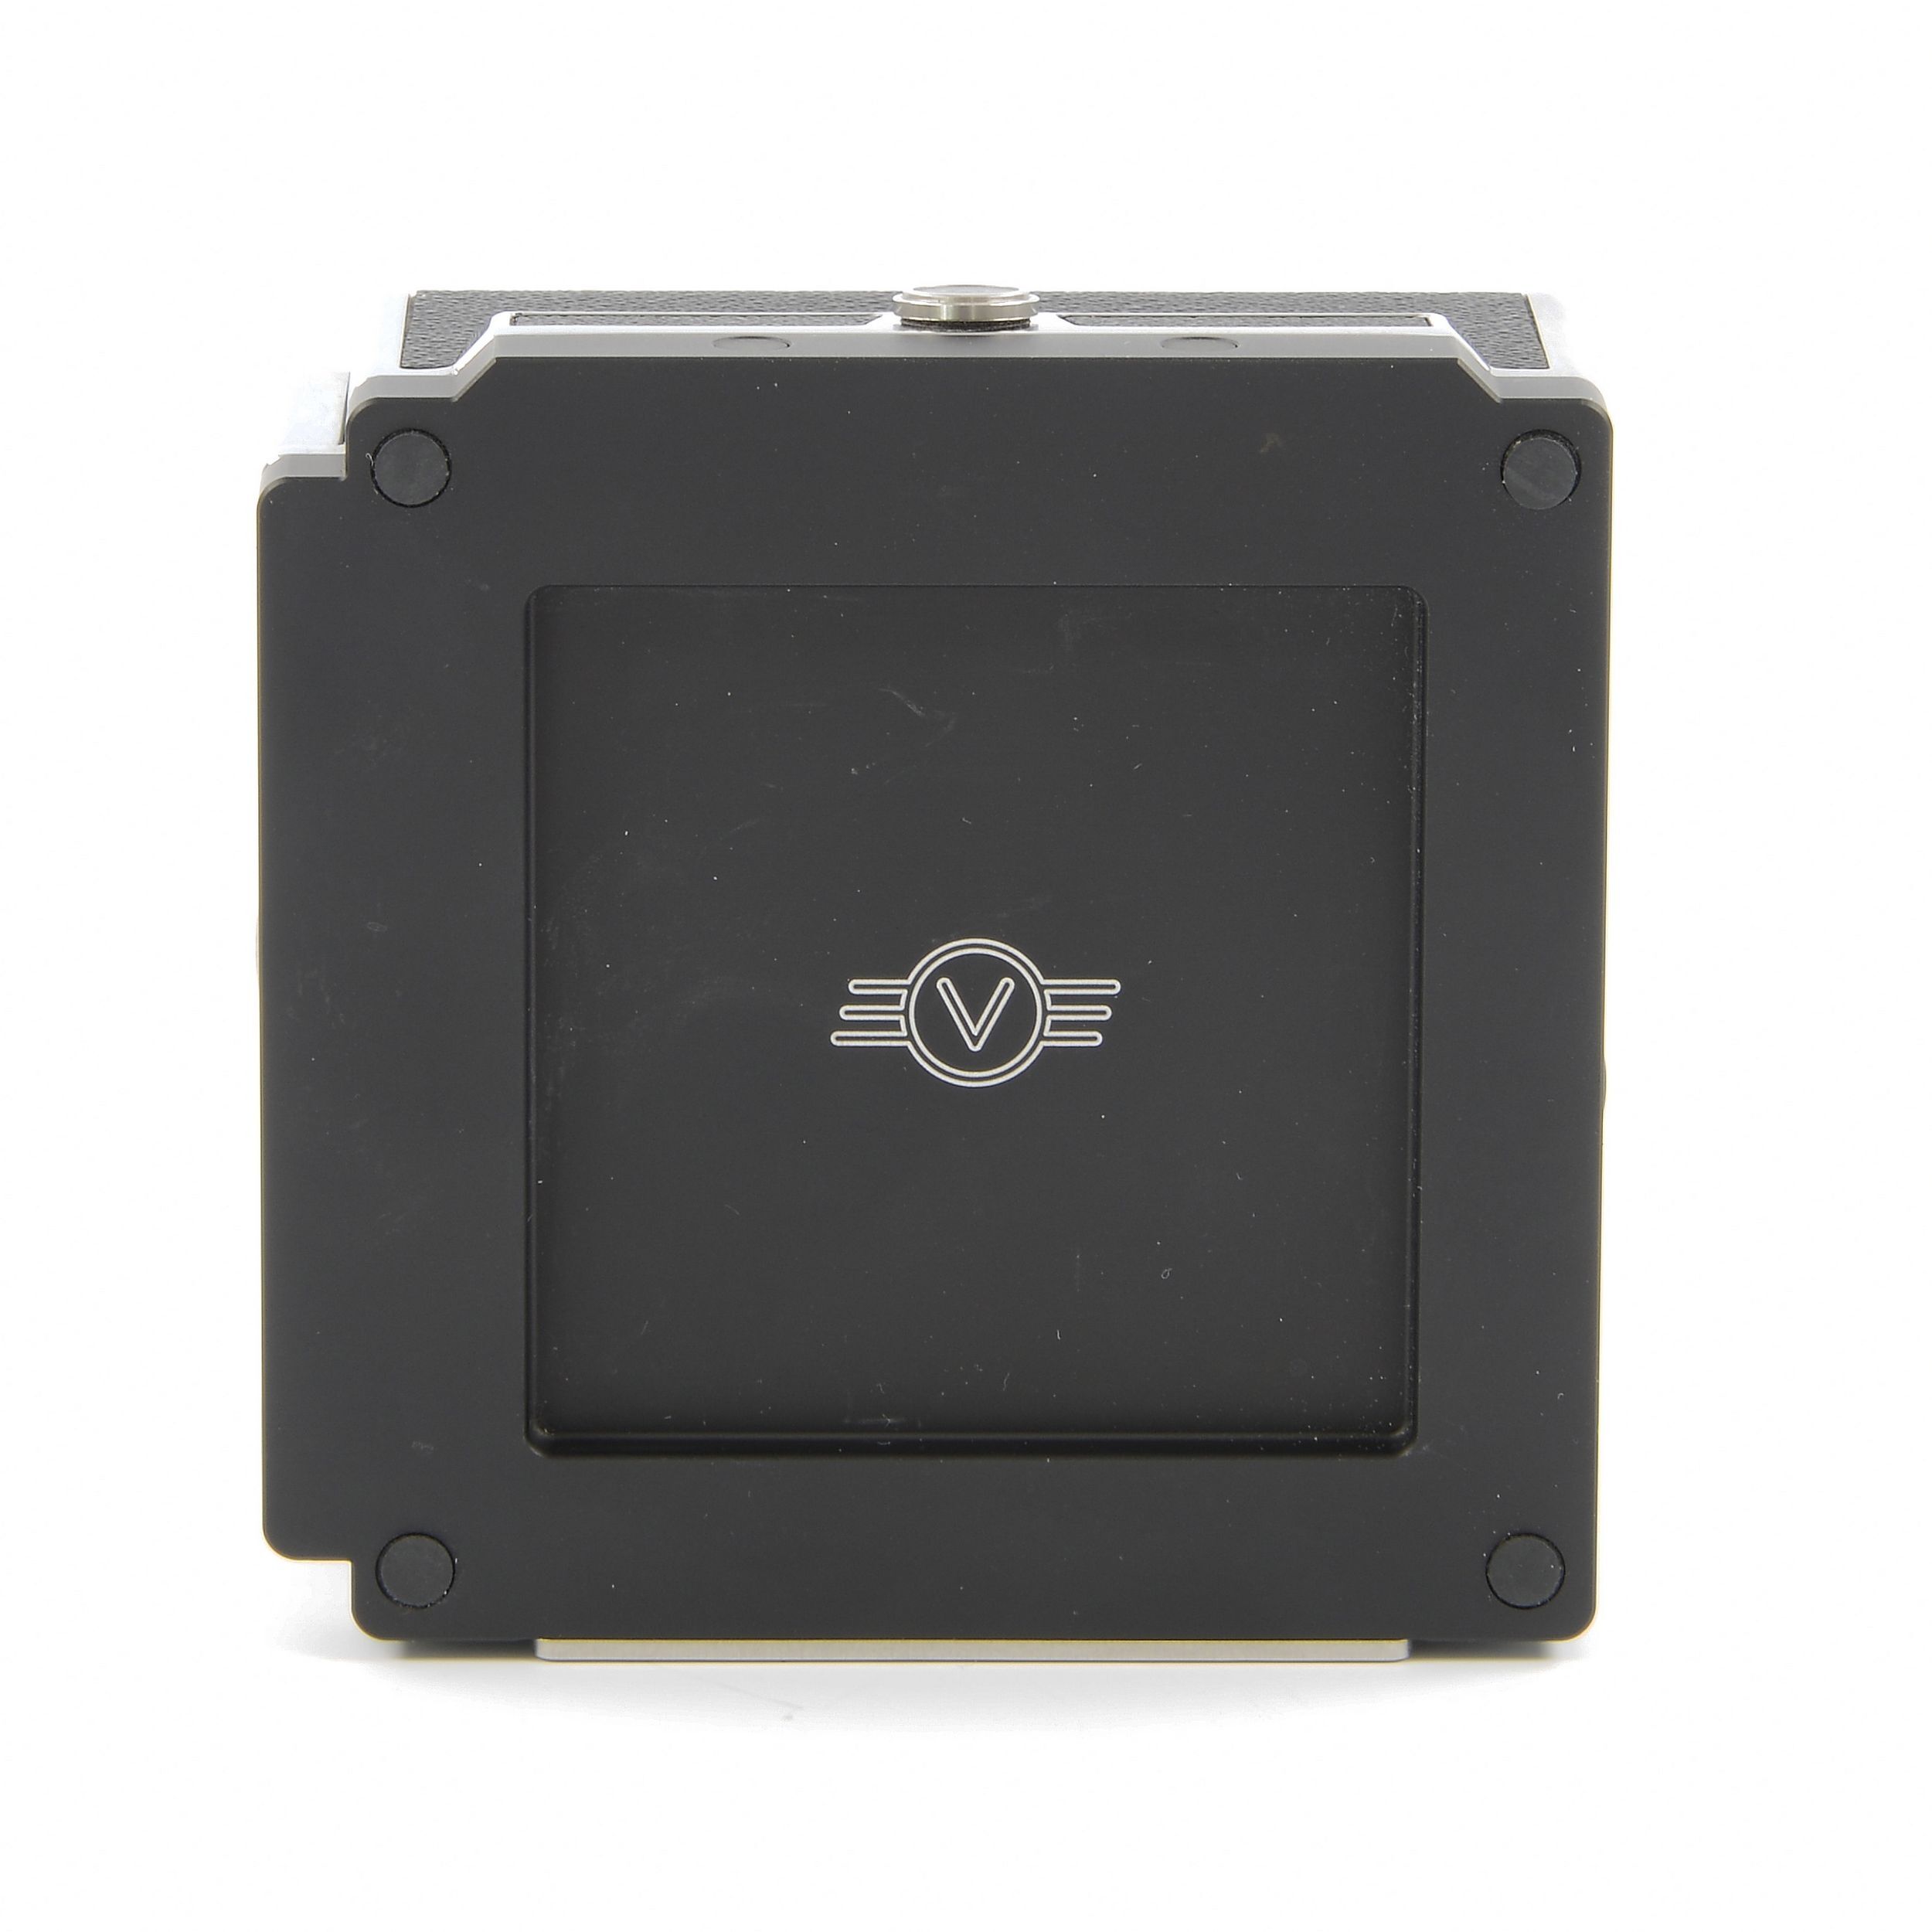 HASSELBLAD CFV-50C DIGITAL BACK FOR HASSELBLAD V SYSTEM + BOX 3034222 #2262